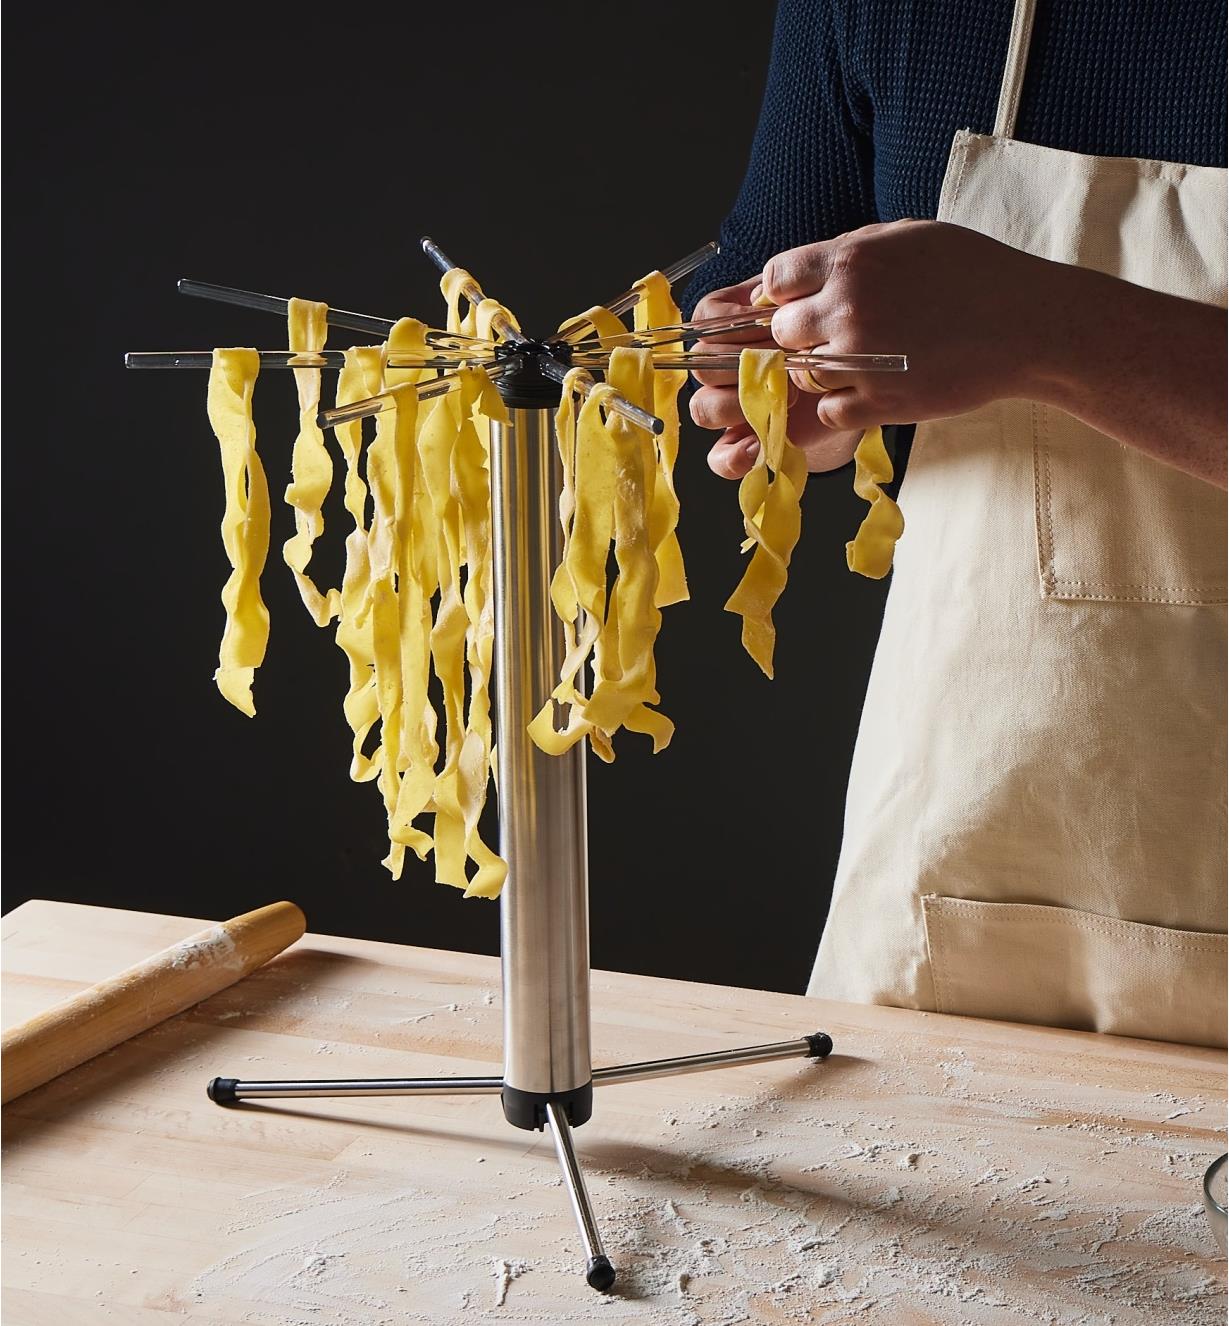 https://assets.leevalley.com/Size4/10124/EV310-collapsible-pasta-drying-rack-u-0083.jpg